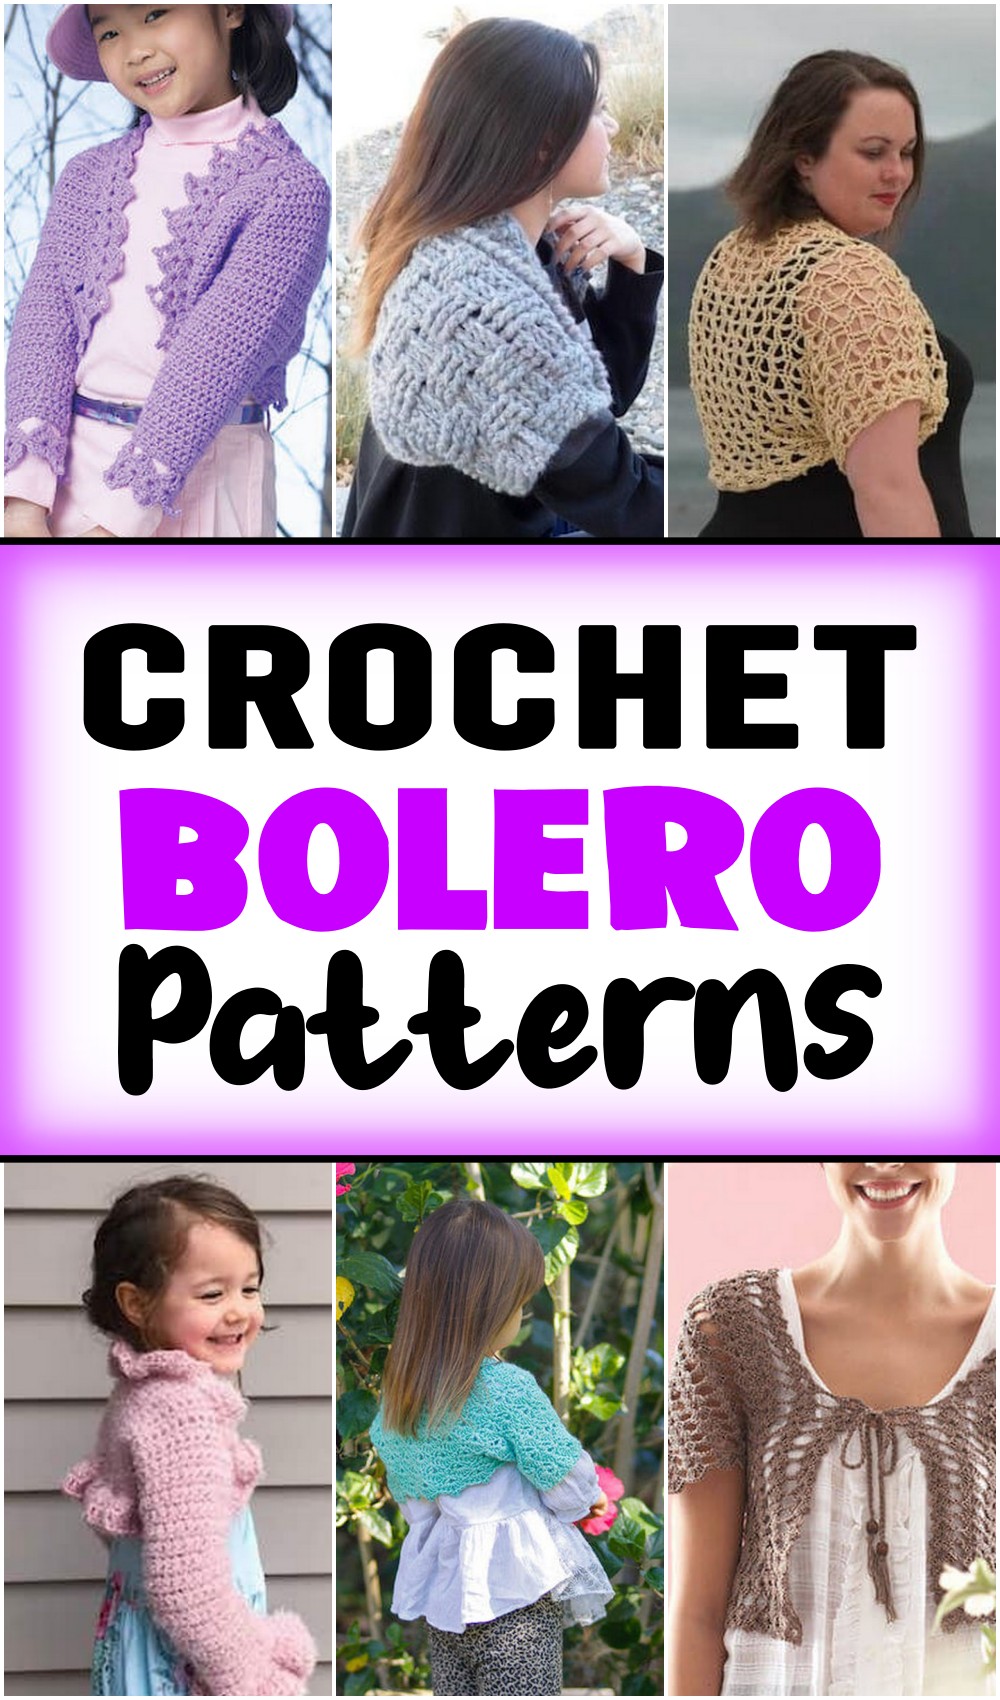 10 Crochet Bolero Patterns